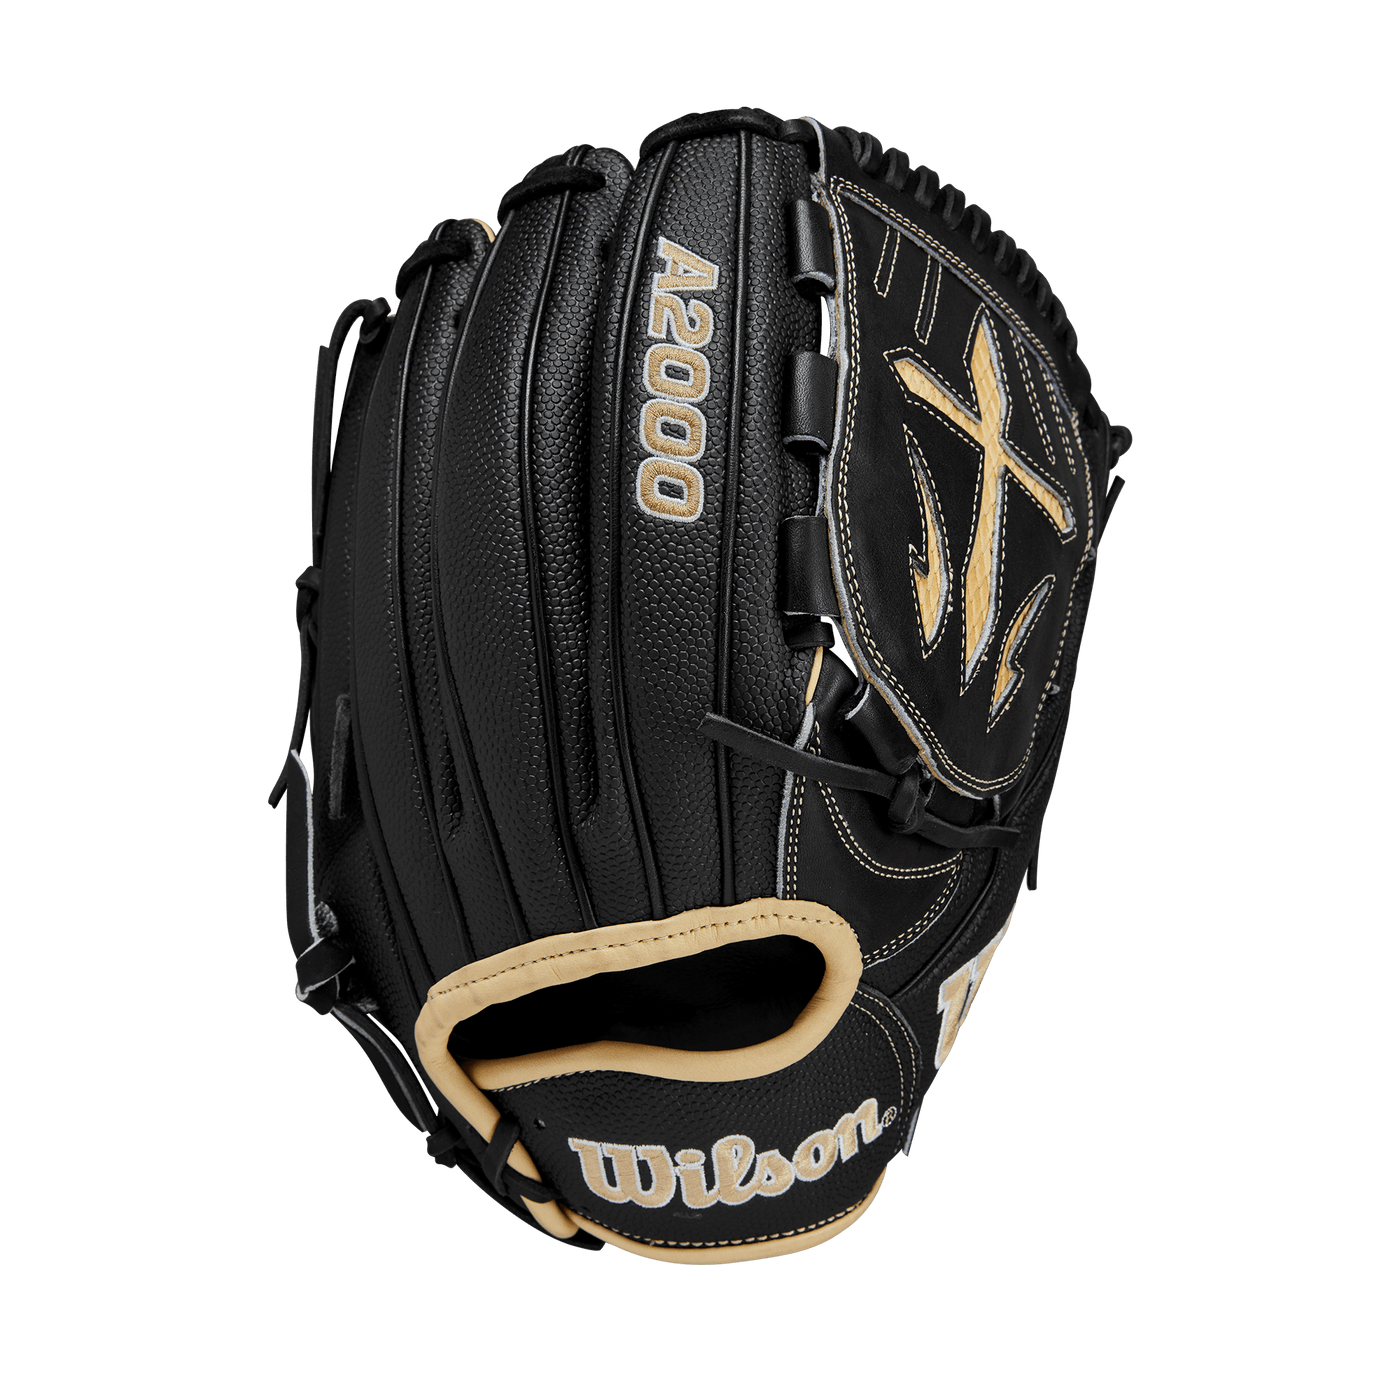 Rate my glove design : r/BaseballGloves